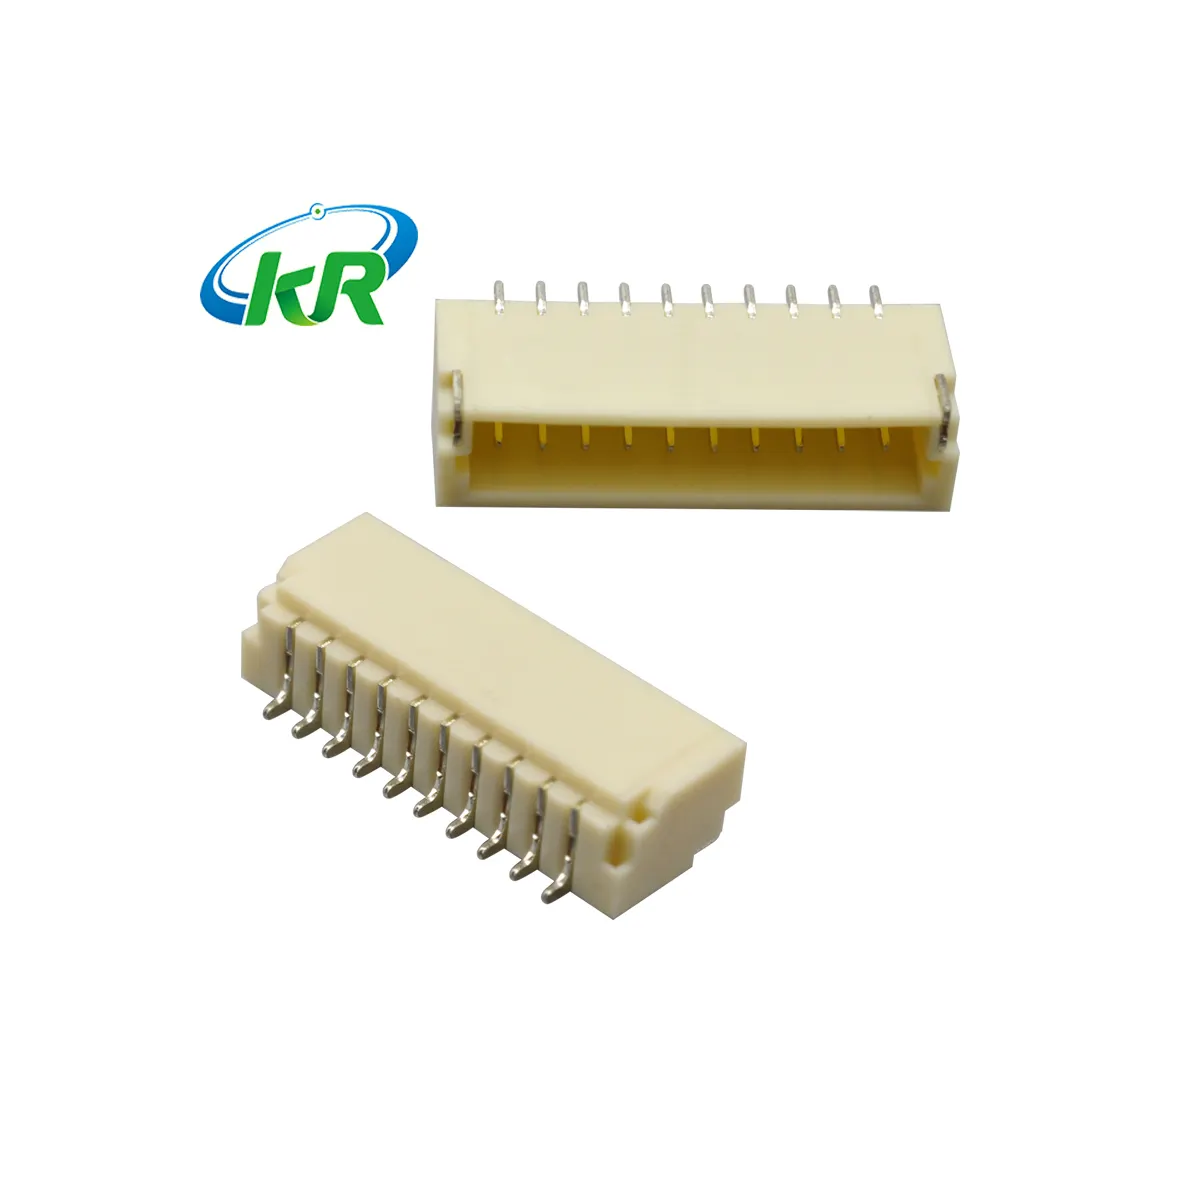 KR1000 jst sh1.0mm pitch SM02B-SRSS-TB 2 way connectors